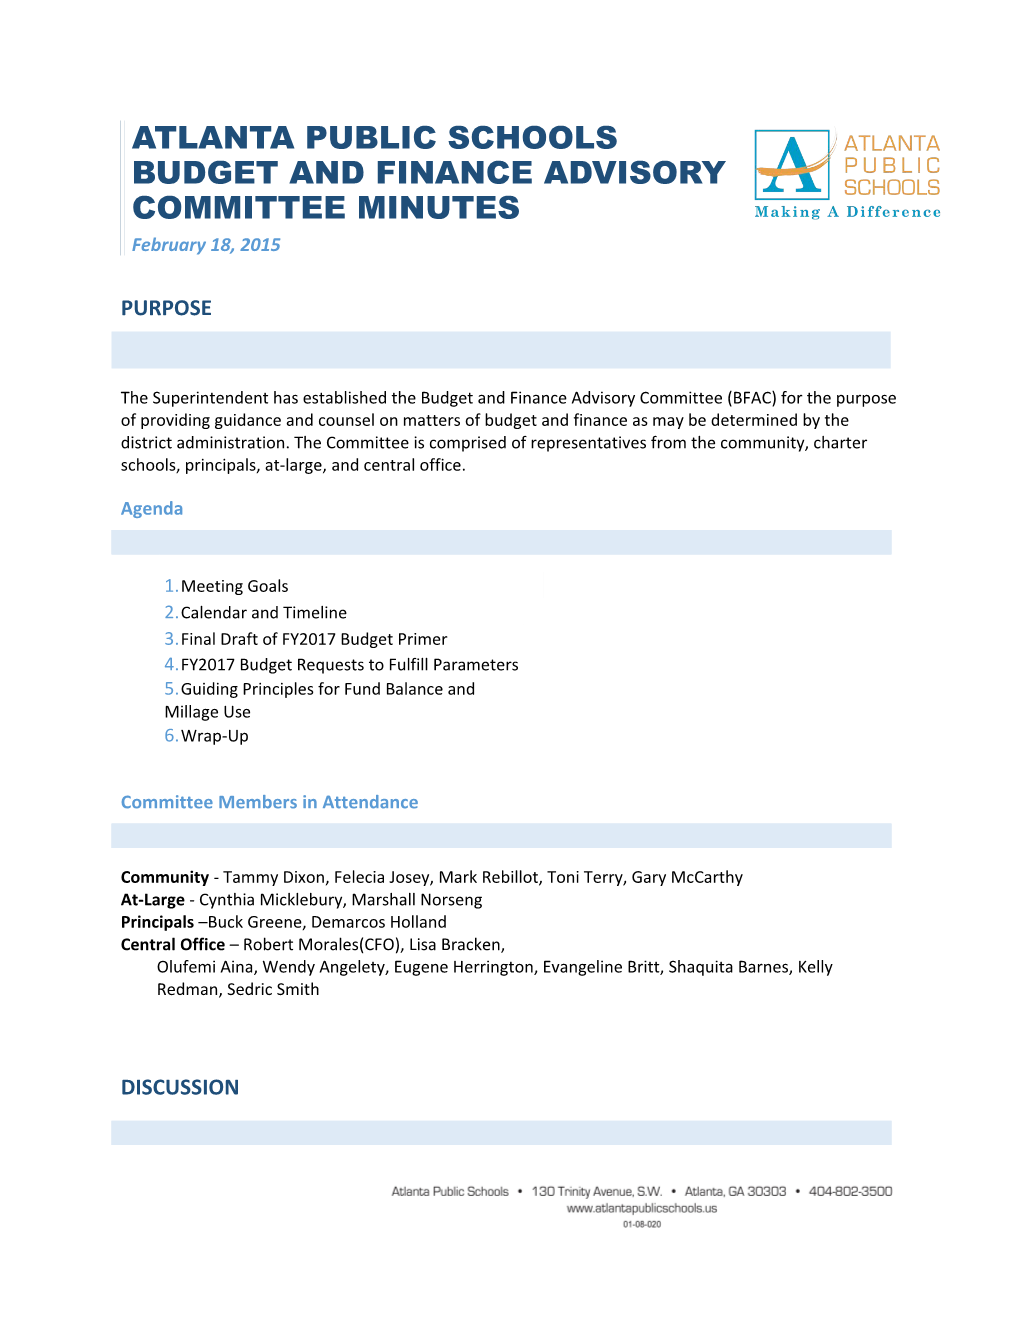 Atlanta Public Schools Budget and Finance Advisory Committee Minutes